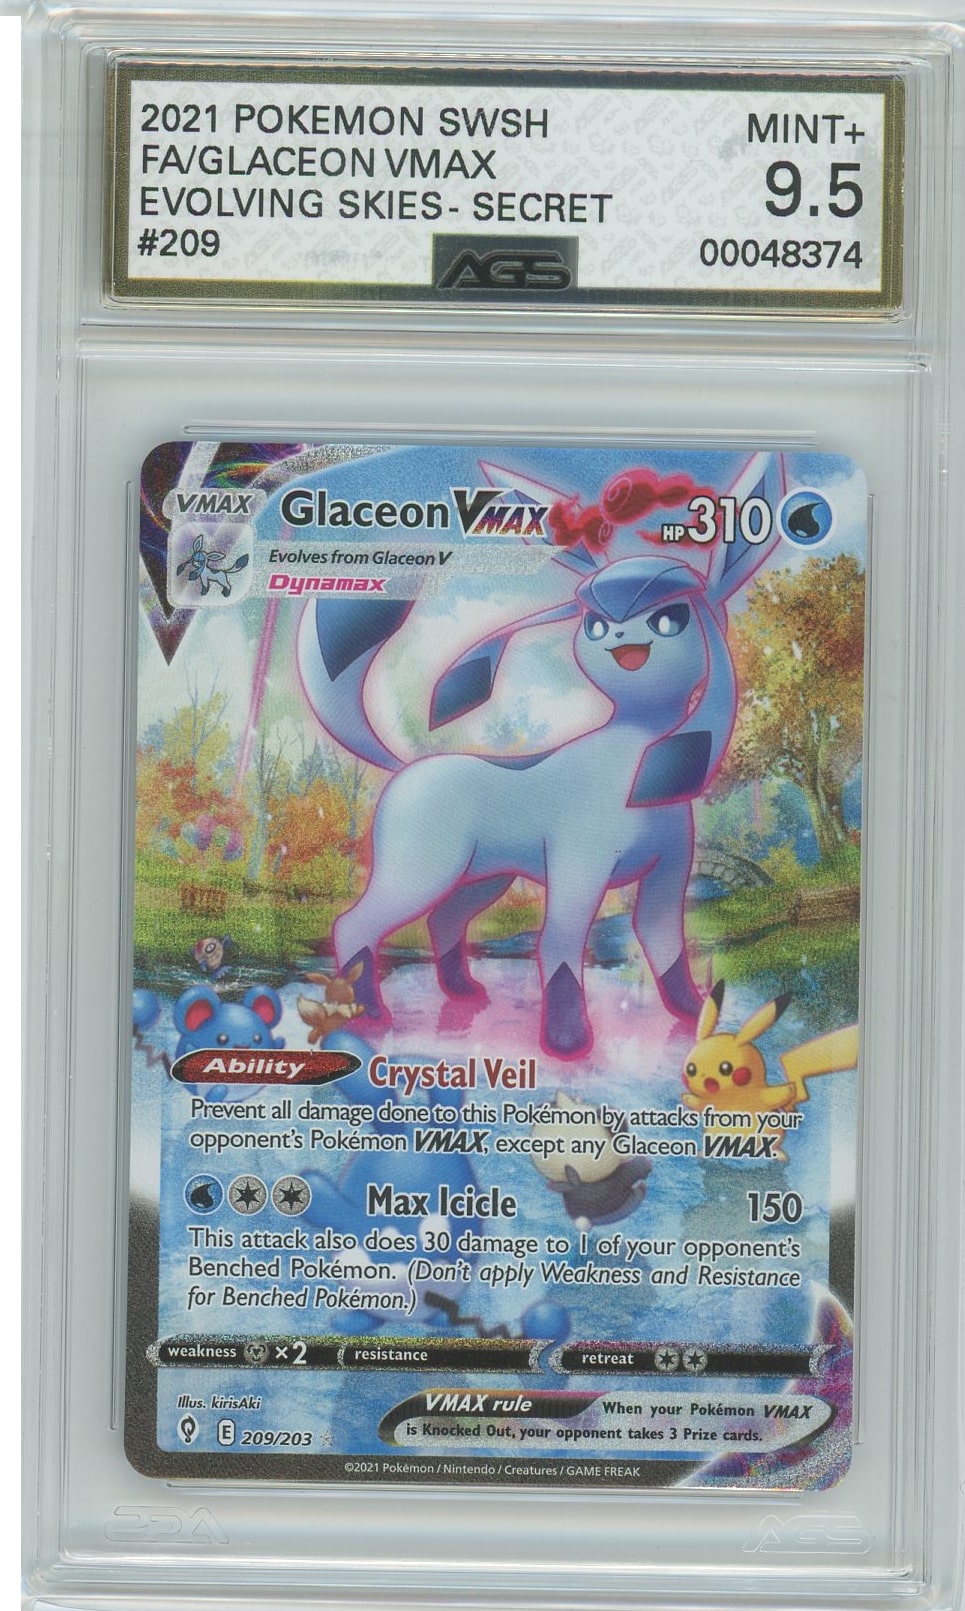 Glaceon VMAX, Pokémon